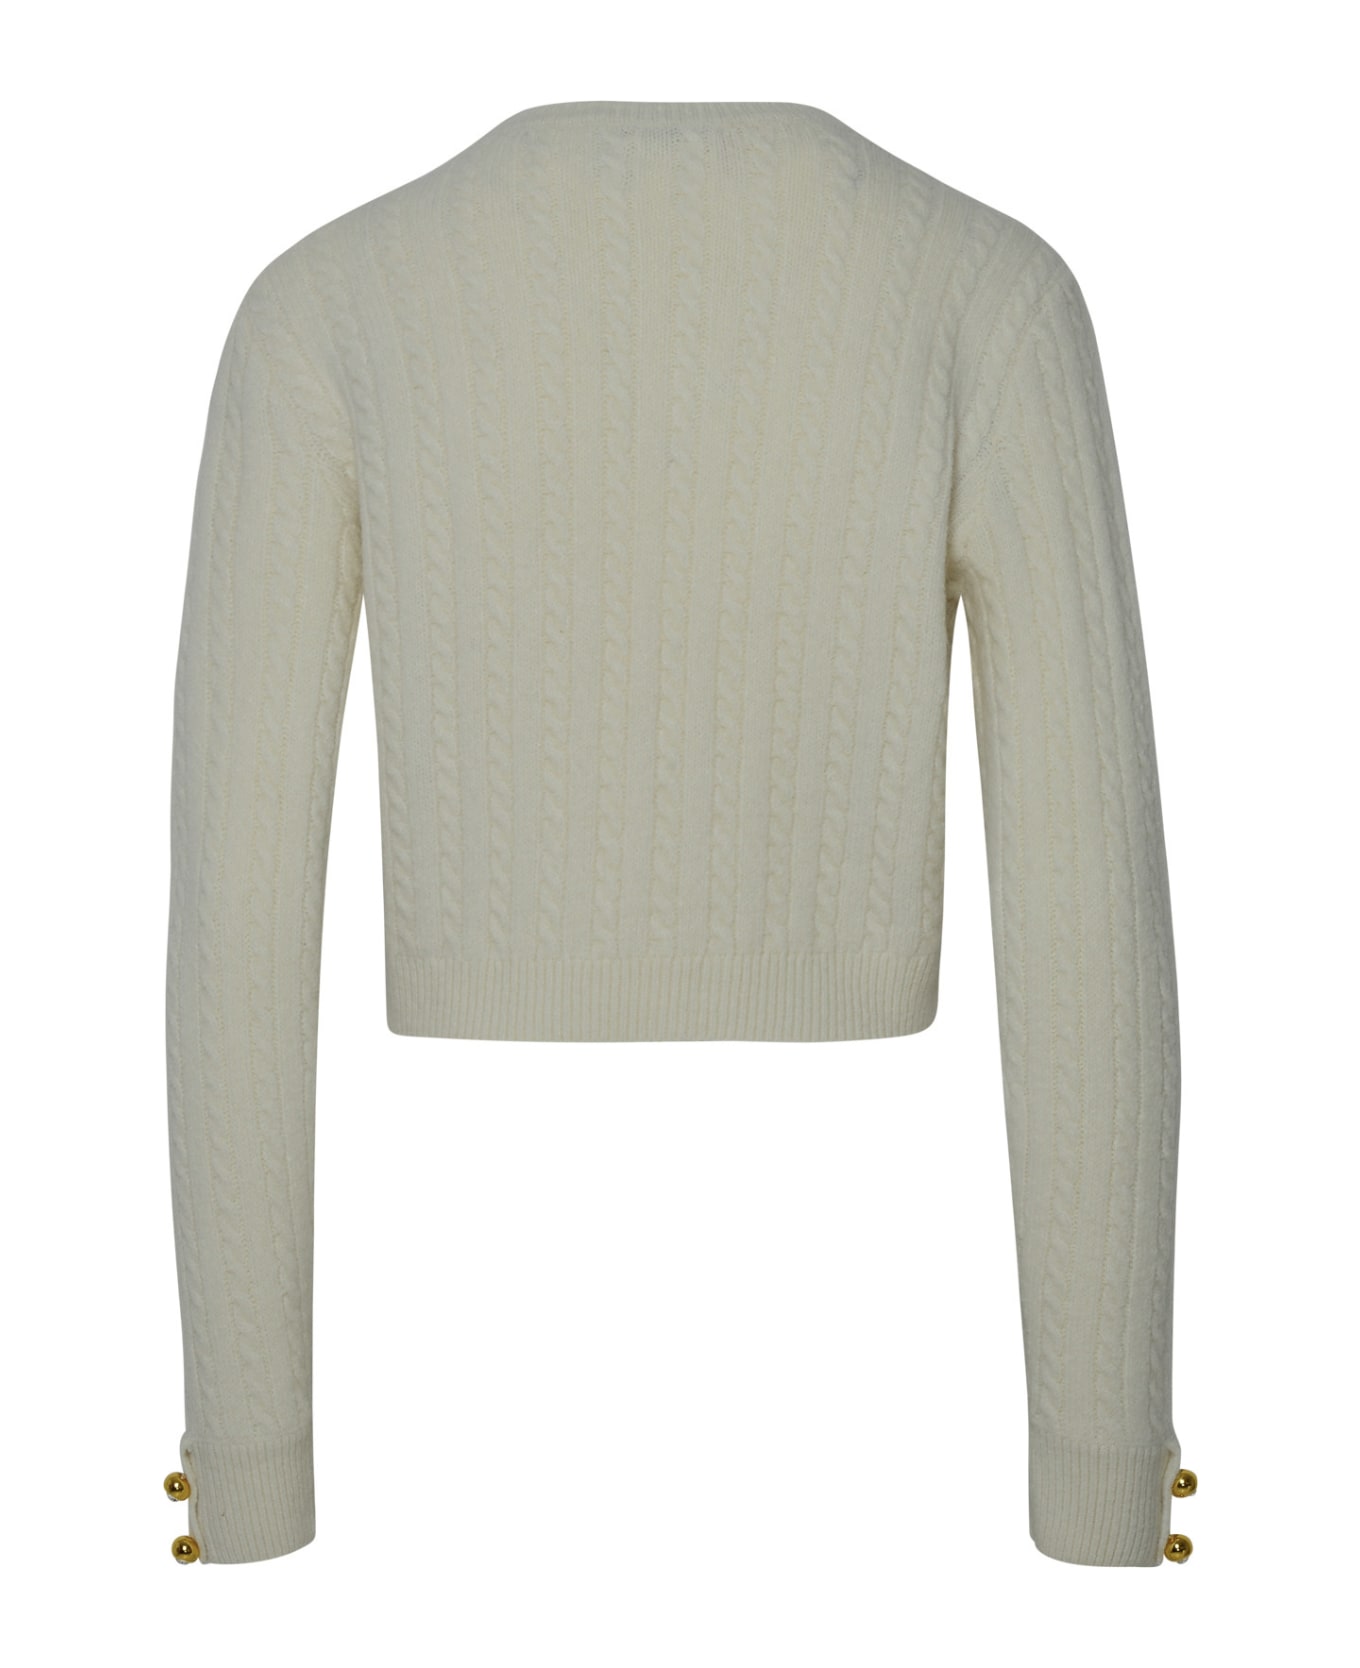 Chiara Ferragni Ivory Wool Blend Sweater - White